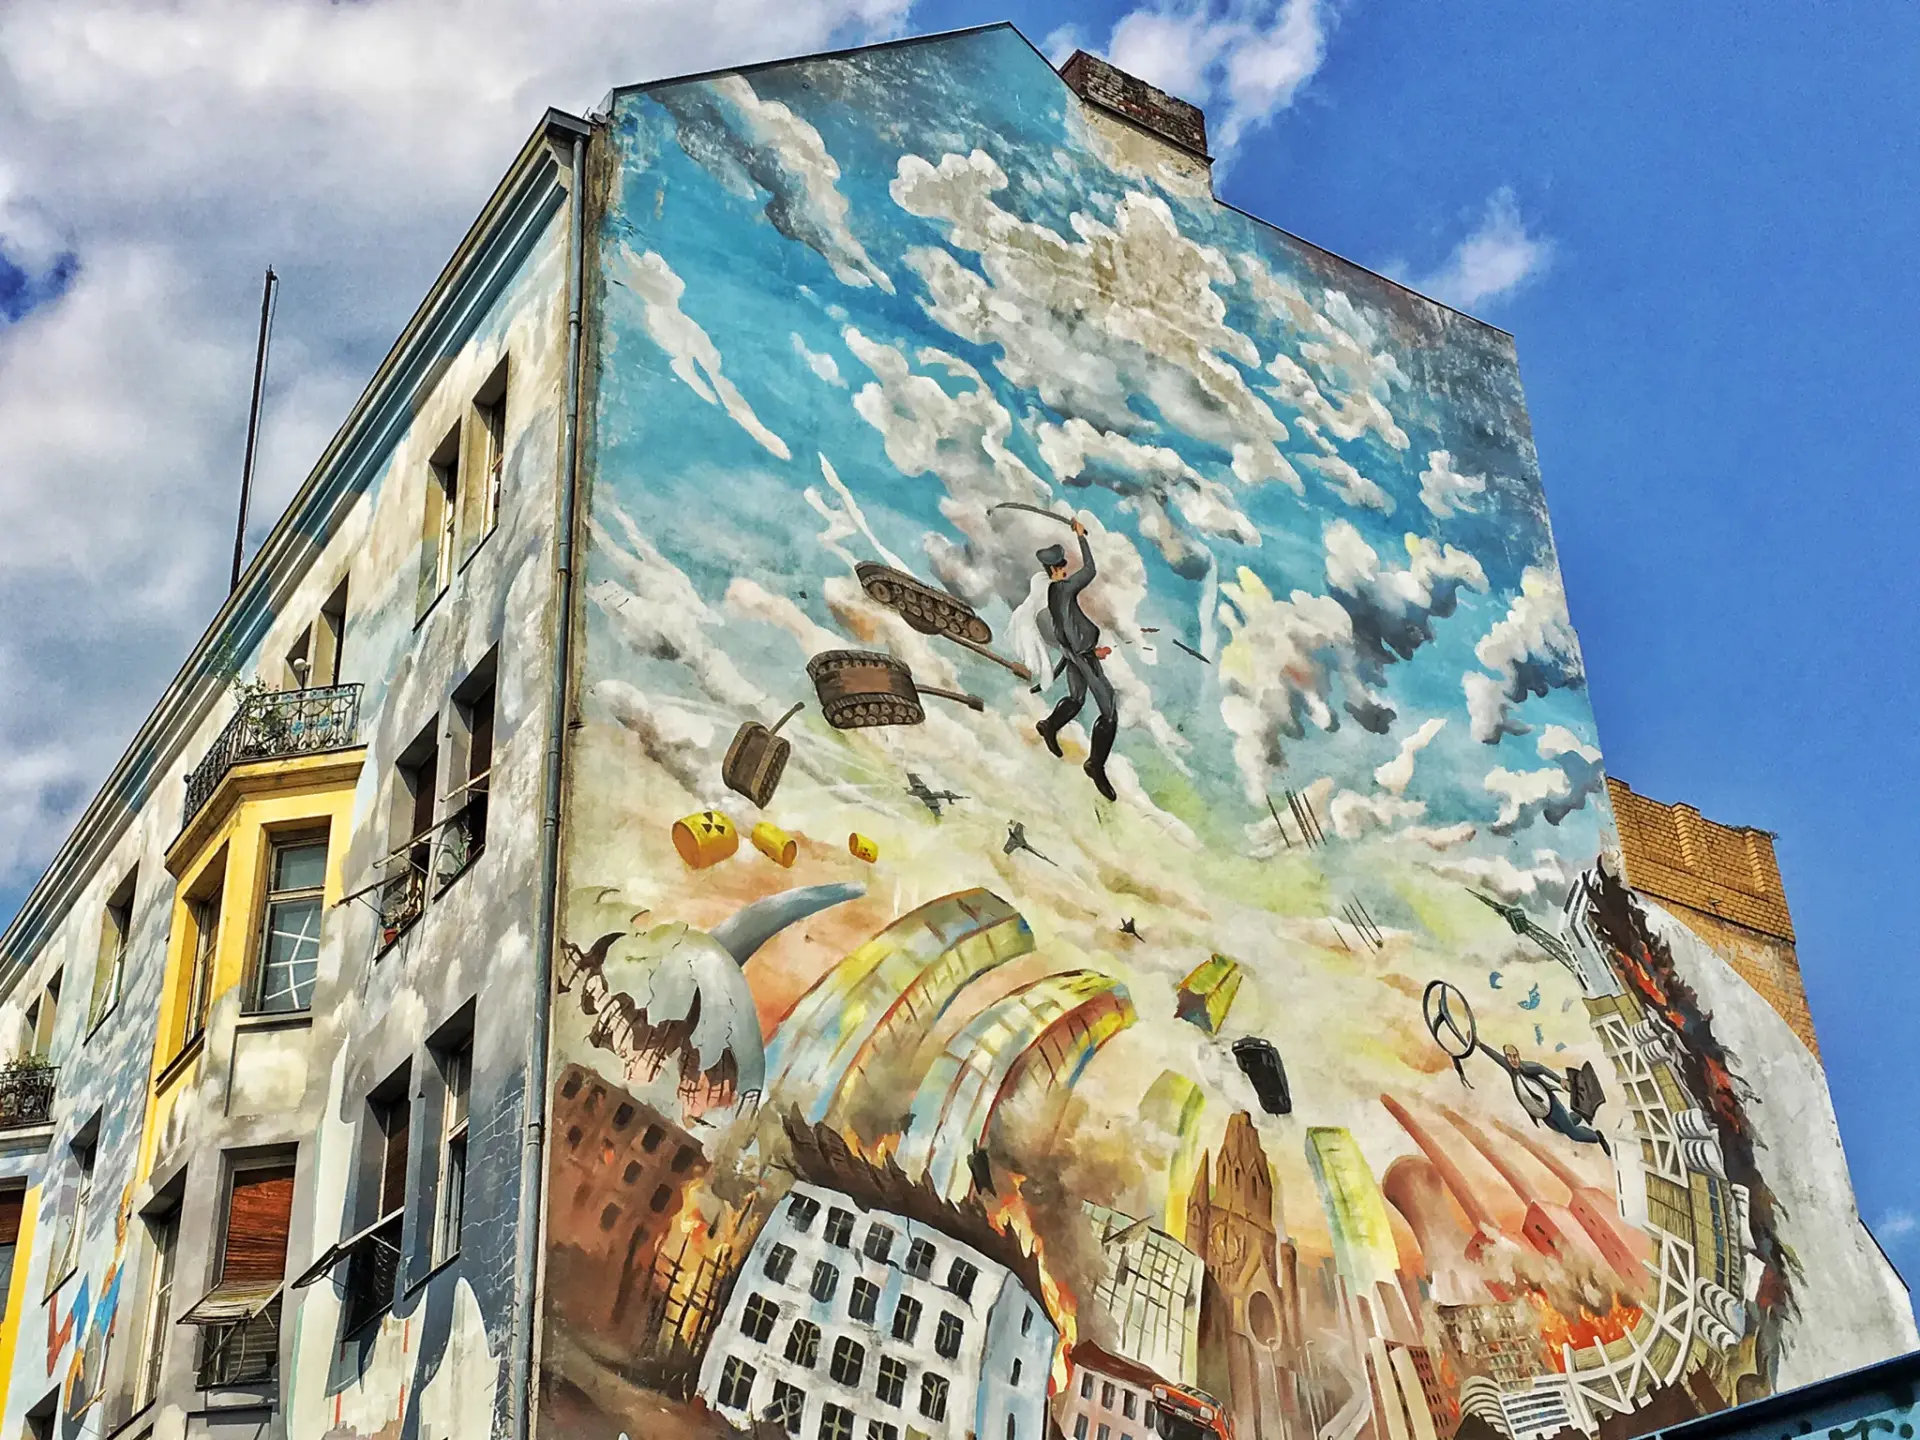 The Artists Behind the Murals: A Close Look at Berlin’s Pioneering Street Art Visionaries